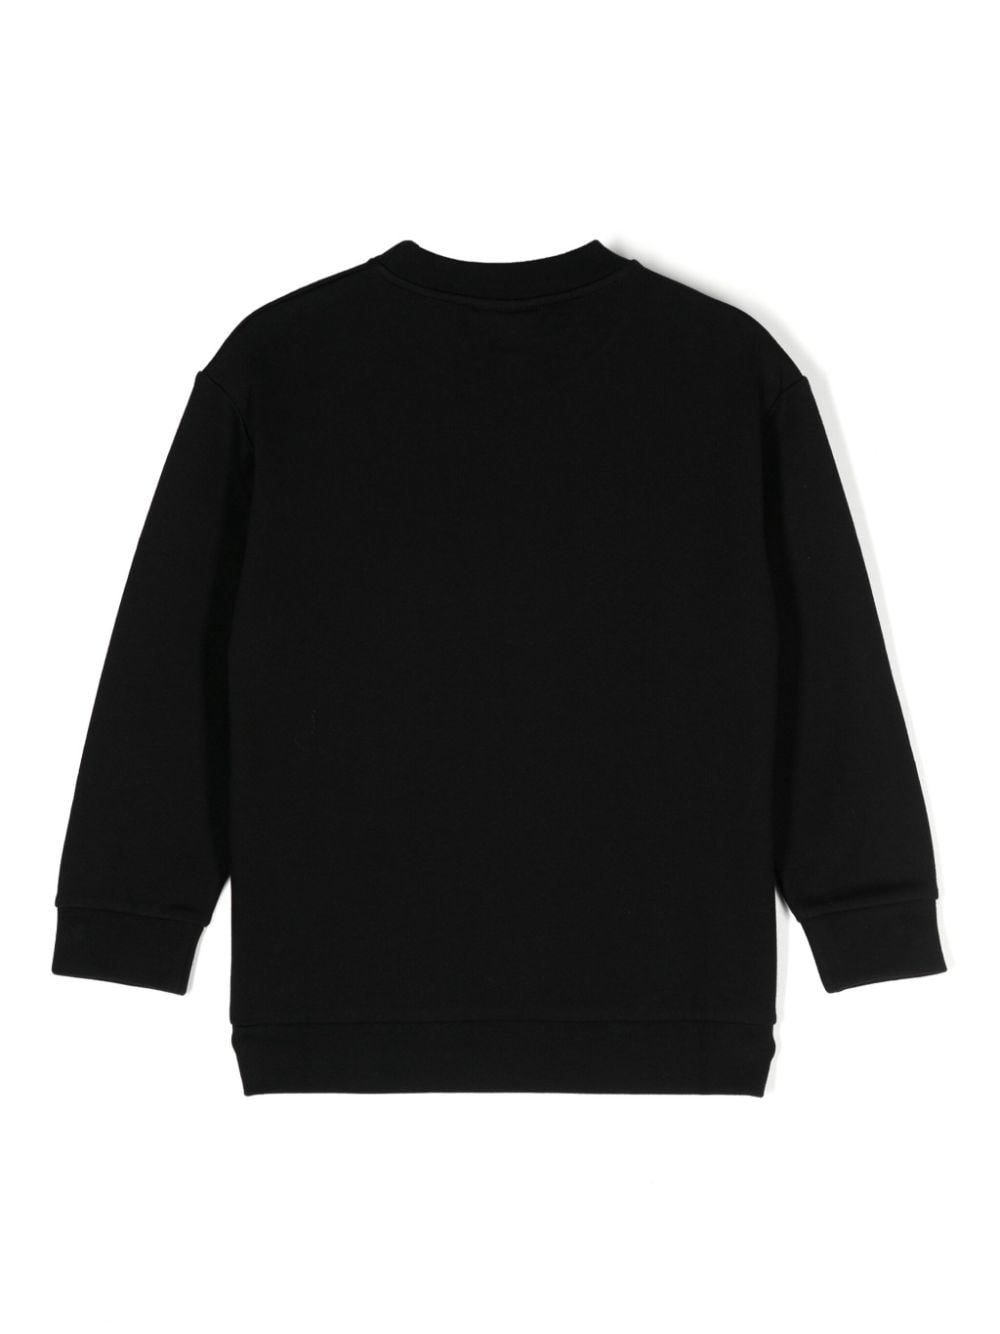 Unisex black cotton sweatshirt with logo